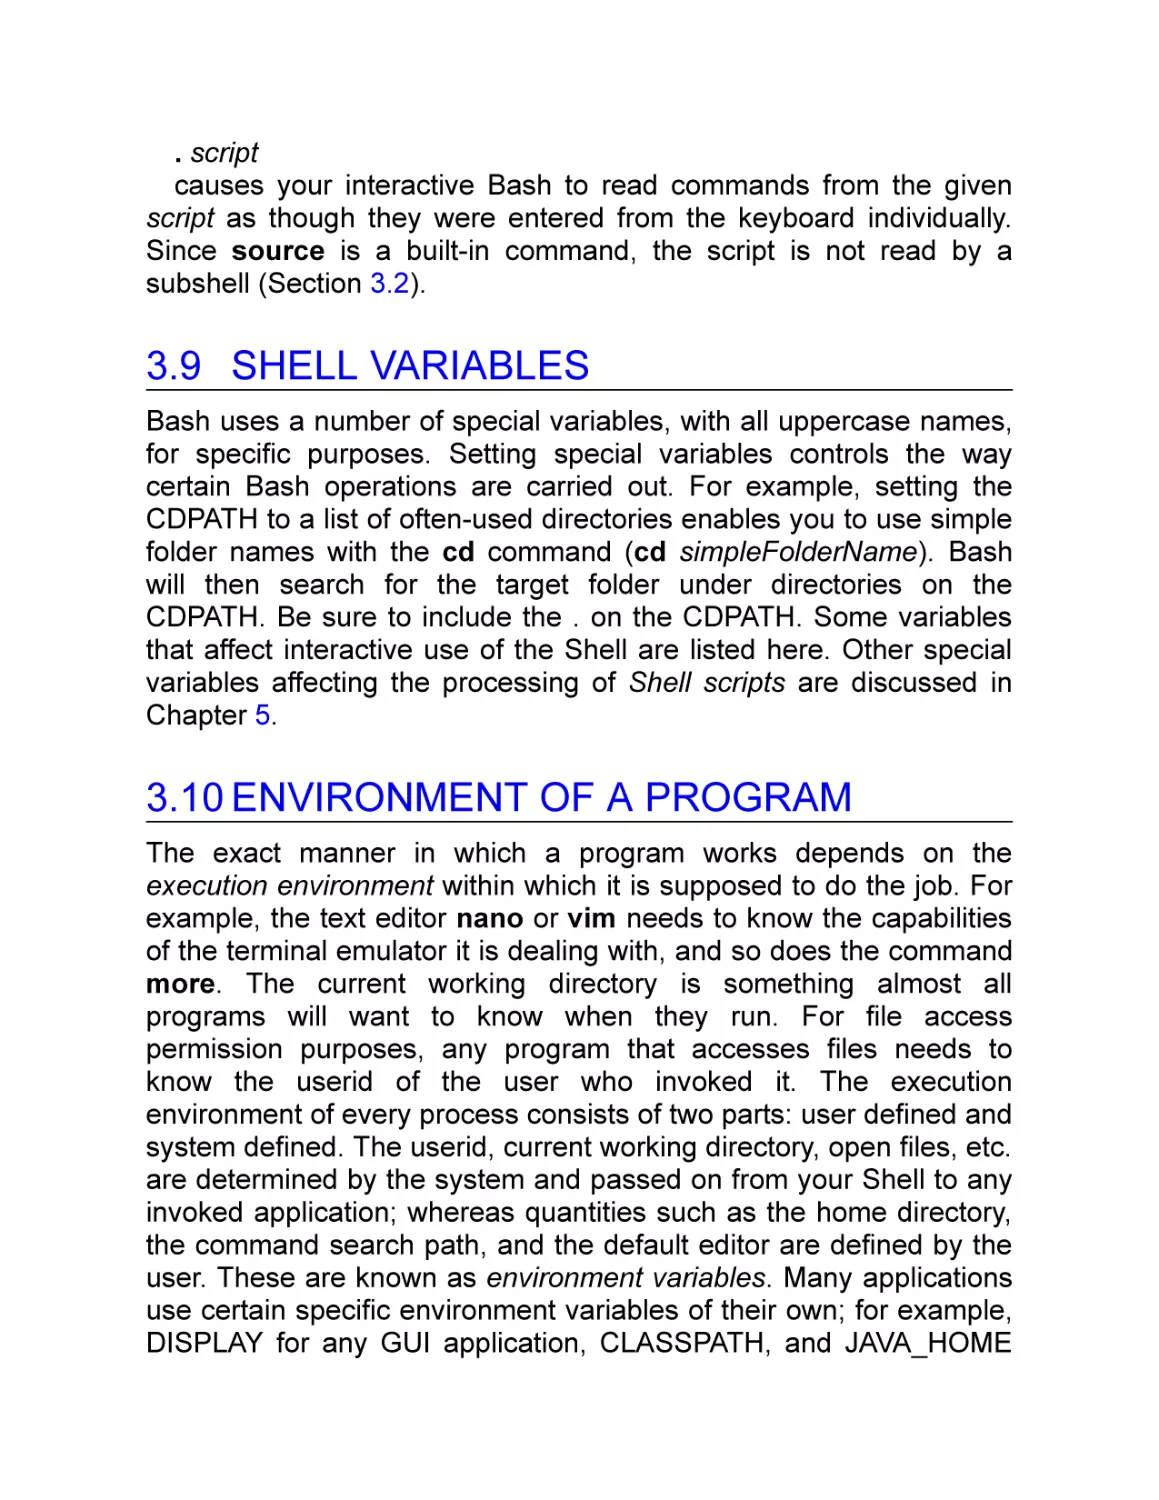 3.9 Shell Variables
3.10 Environment of a Program